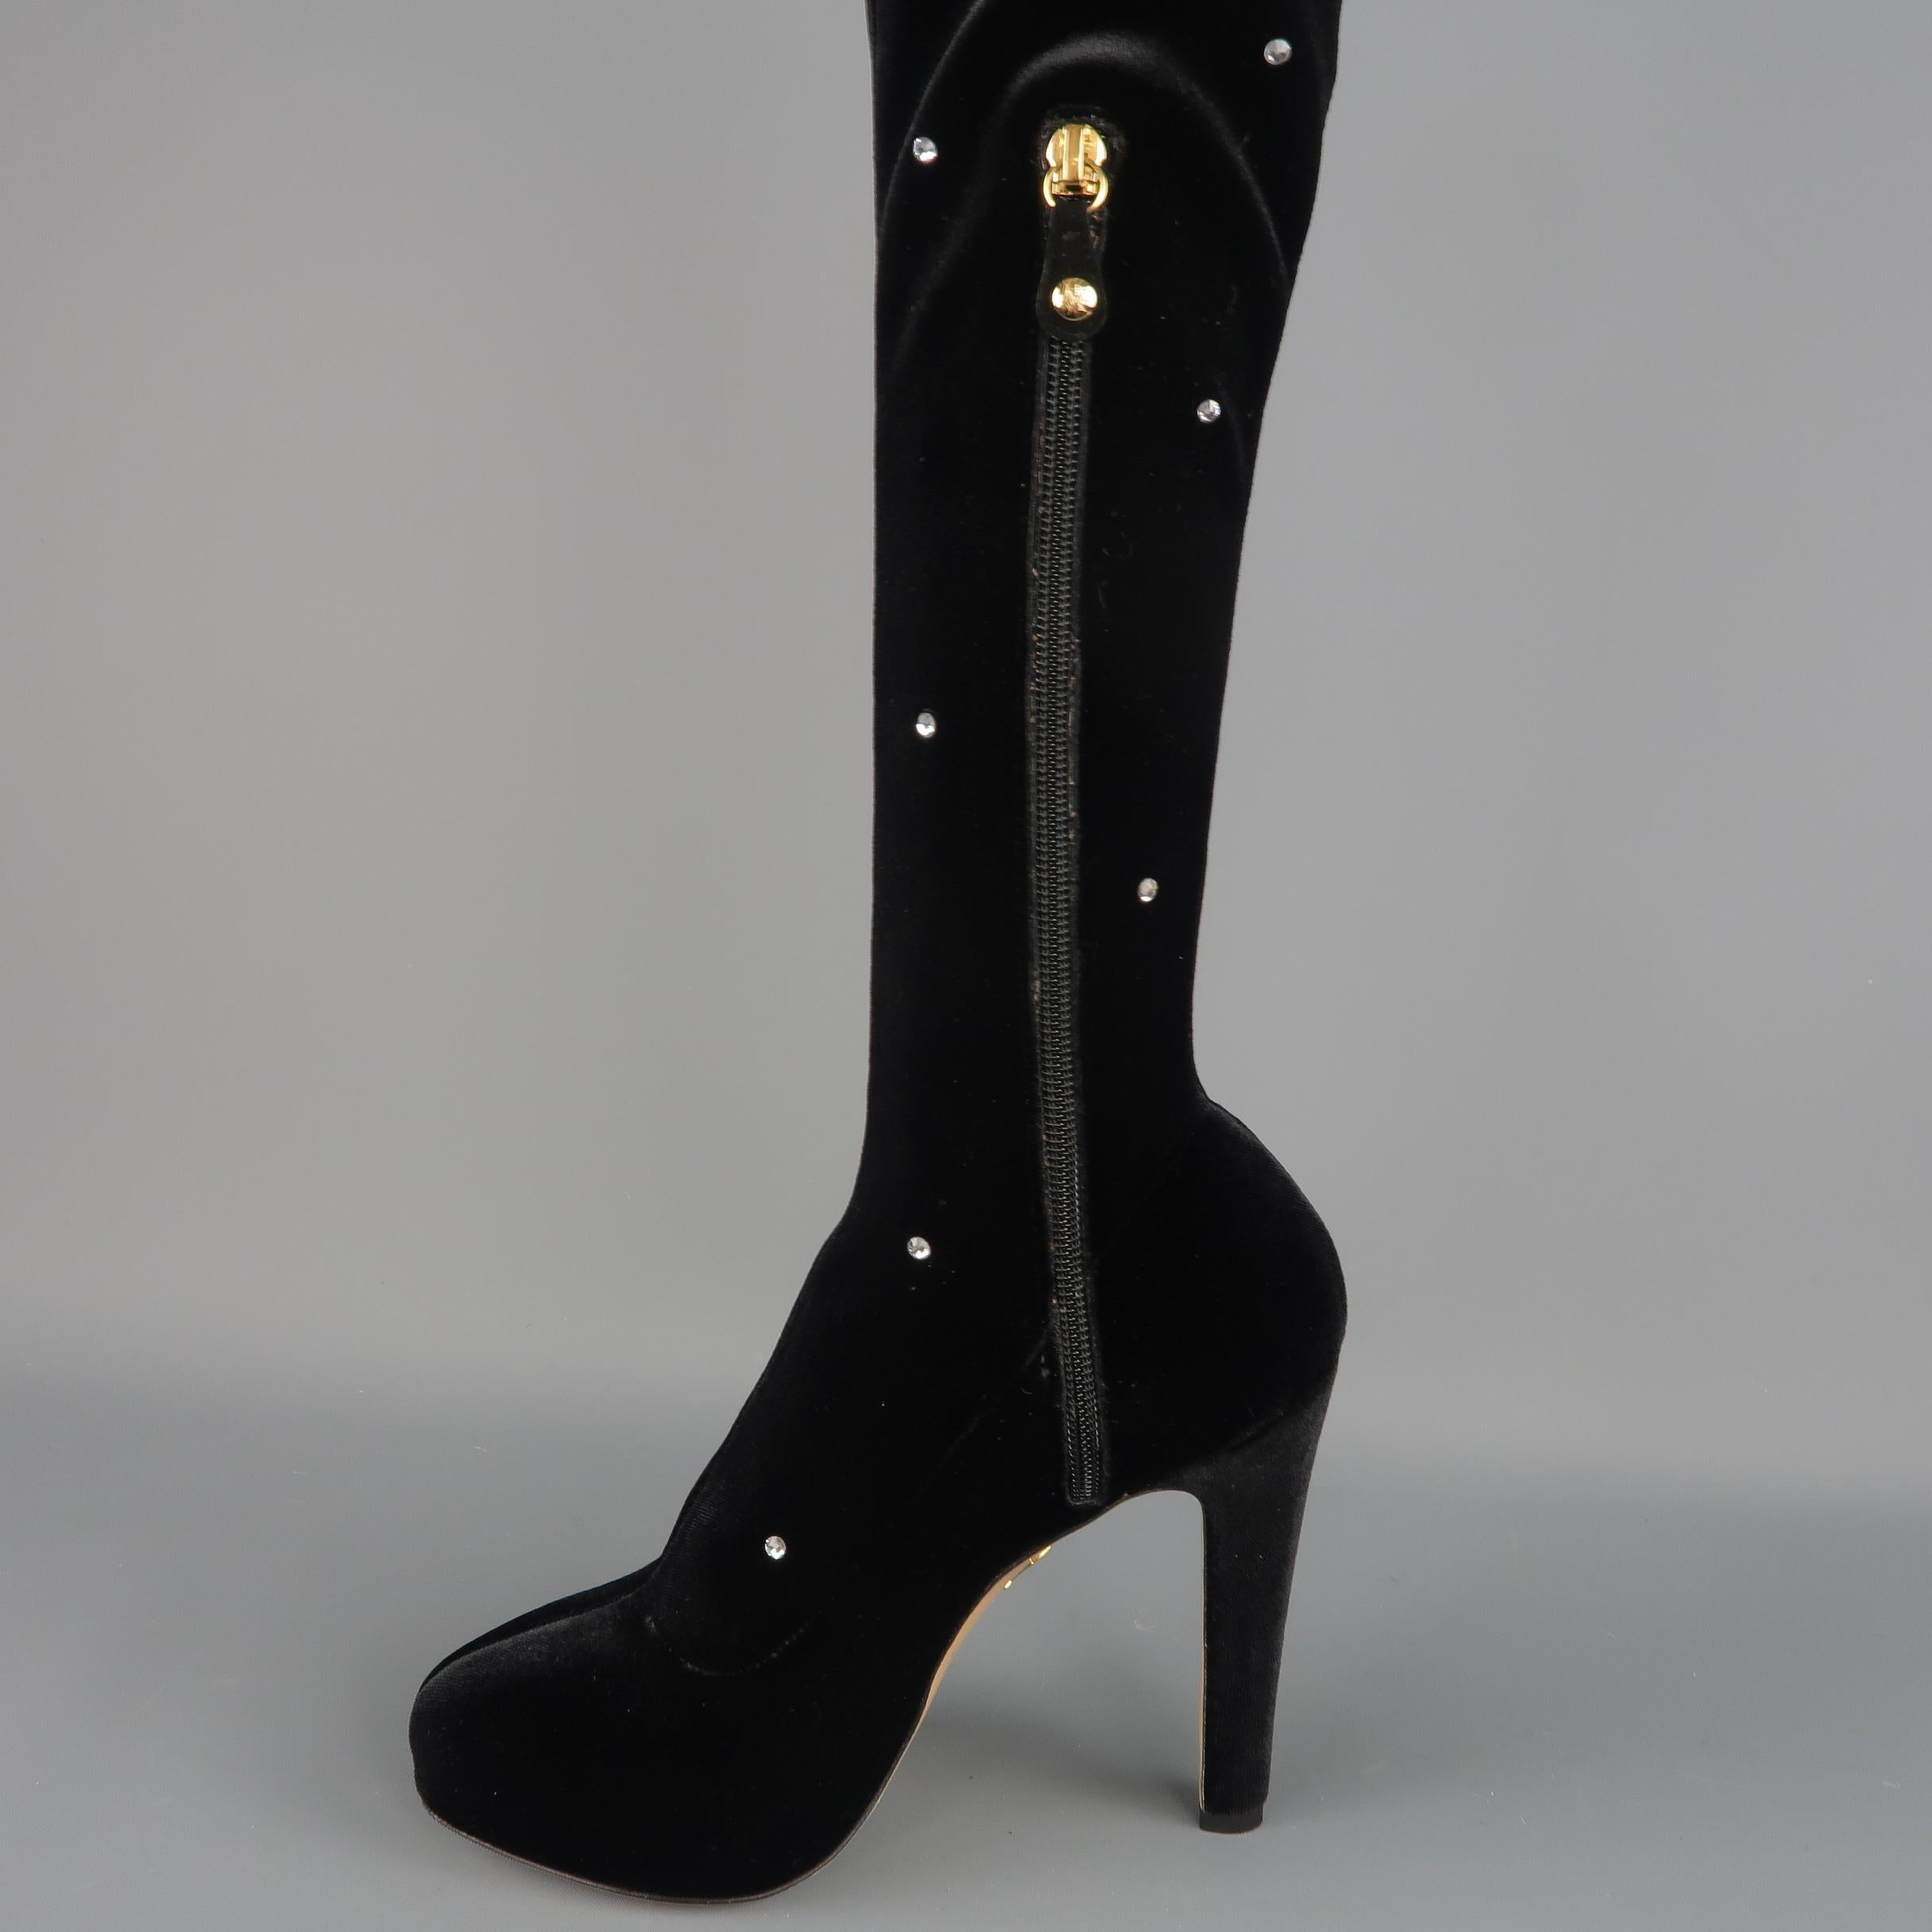 CHARLOTTE OLYMPIA Boots - Size US 7 - Black Velvet Over The Knee Heels 2